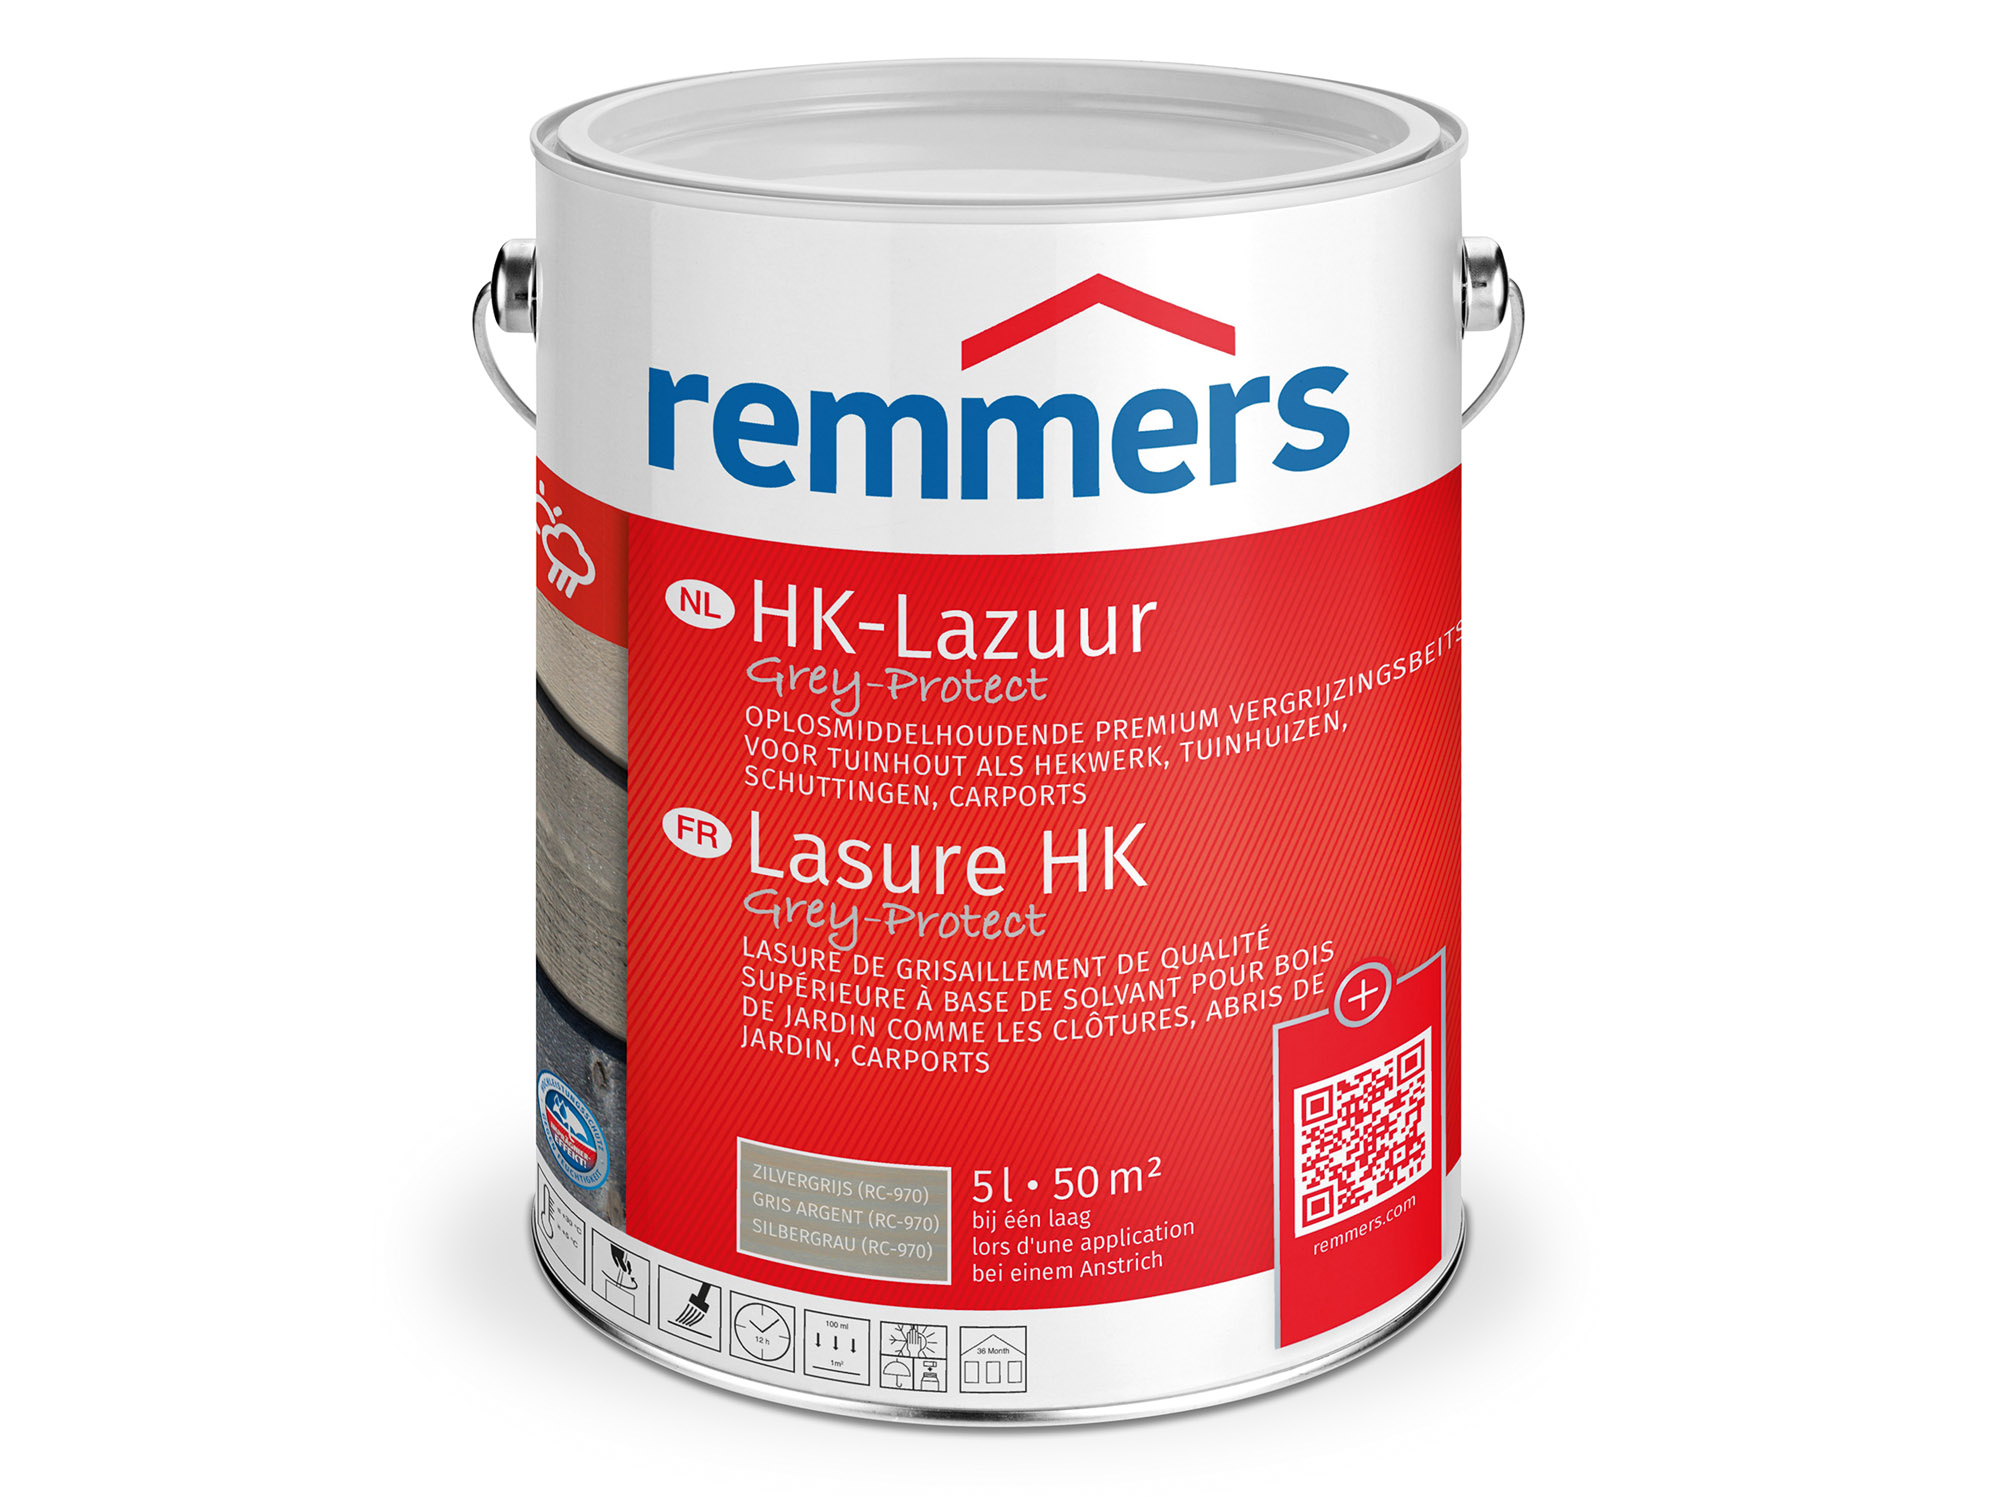 Remmers HK-Lazuur Grey Protect zilvergrijs